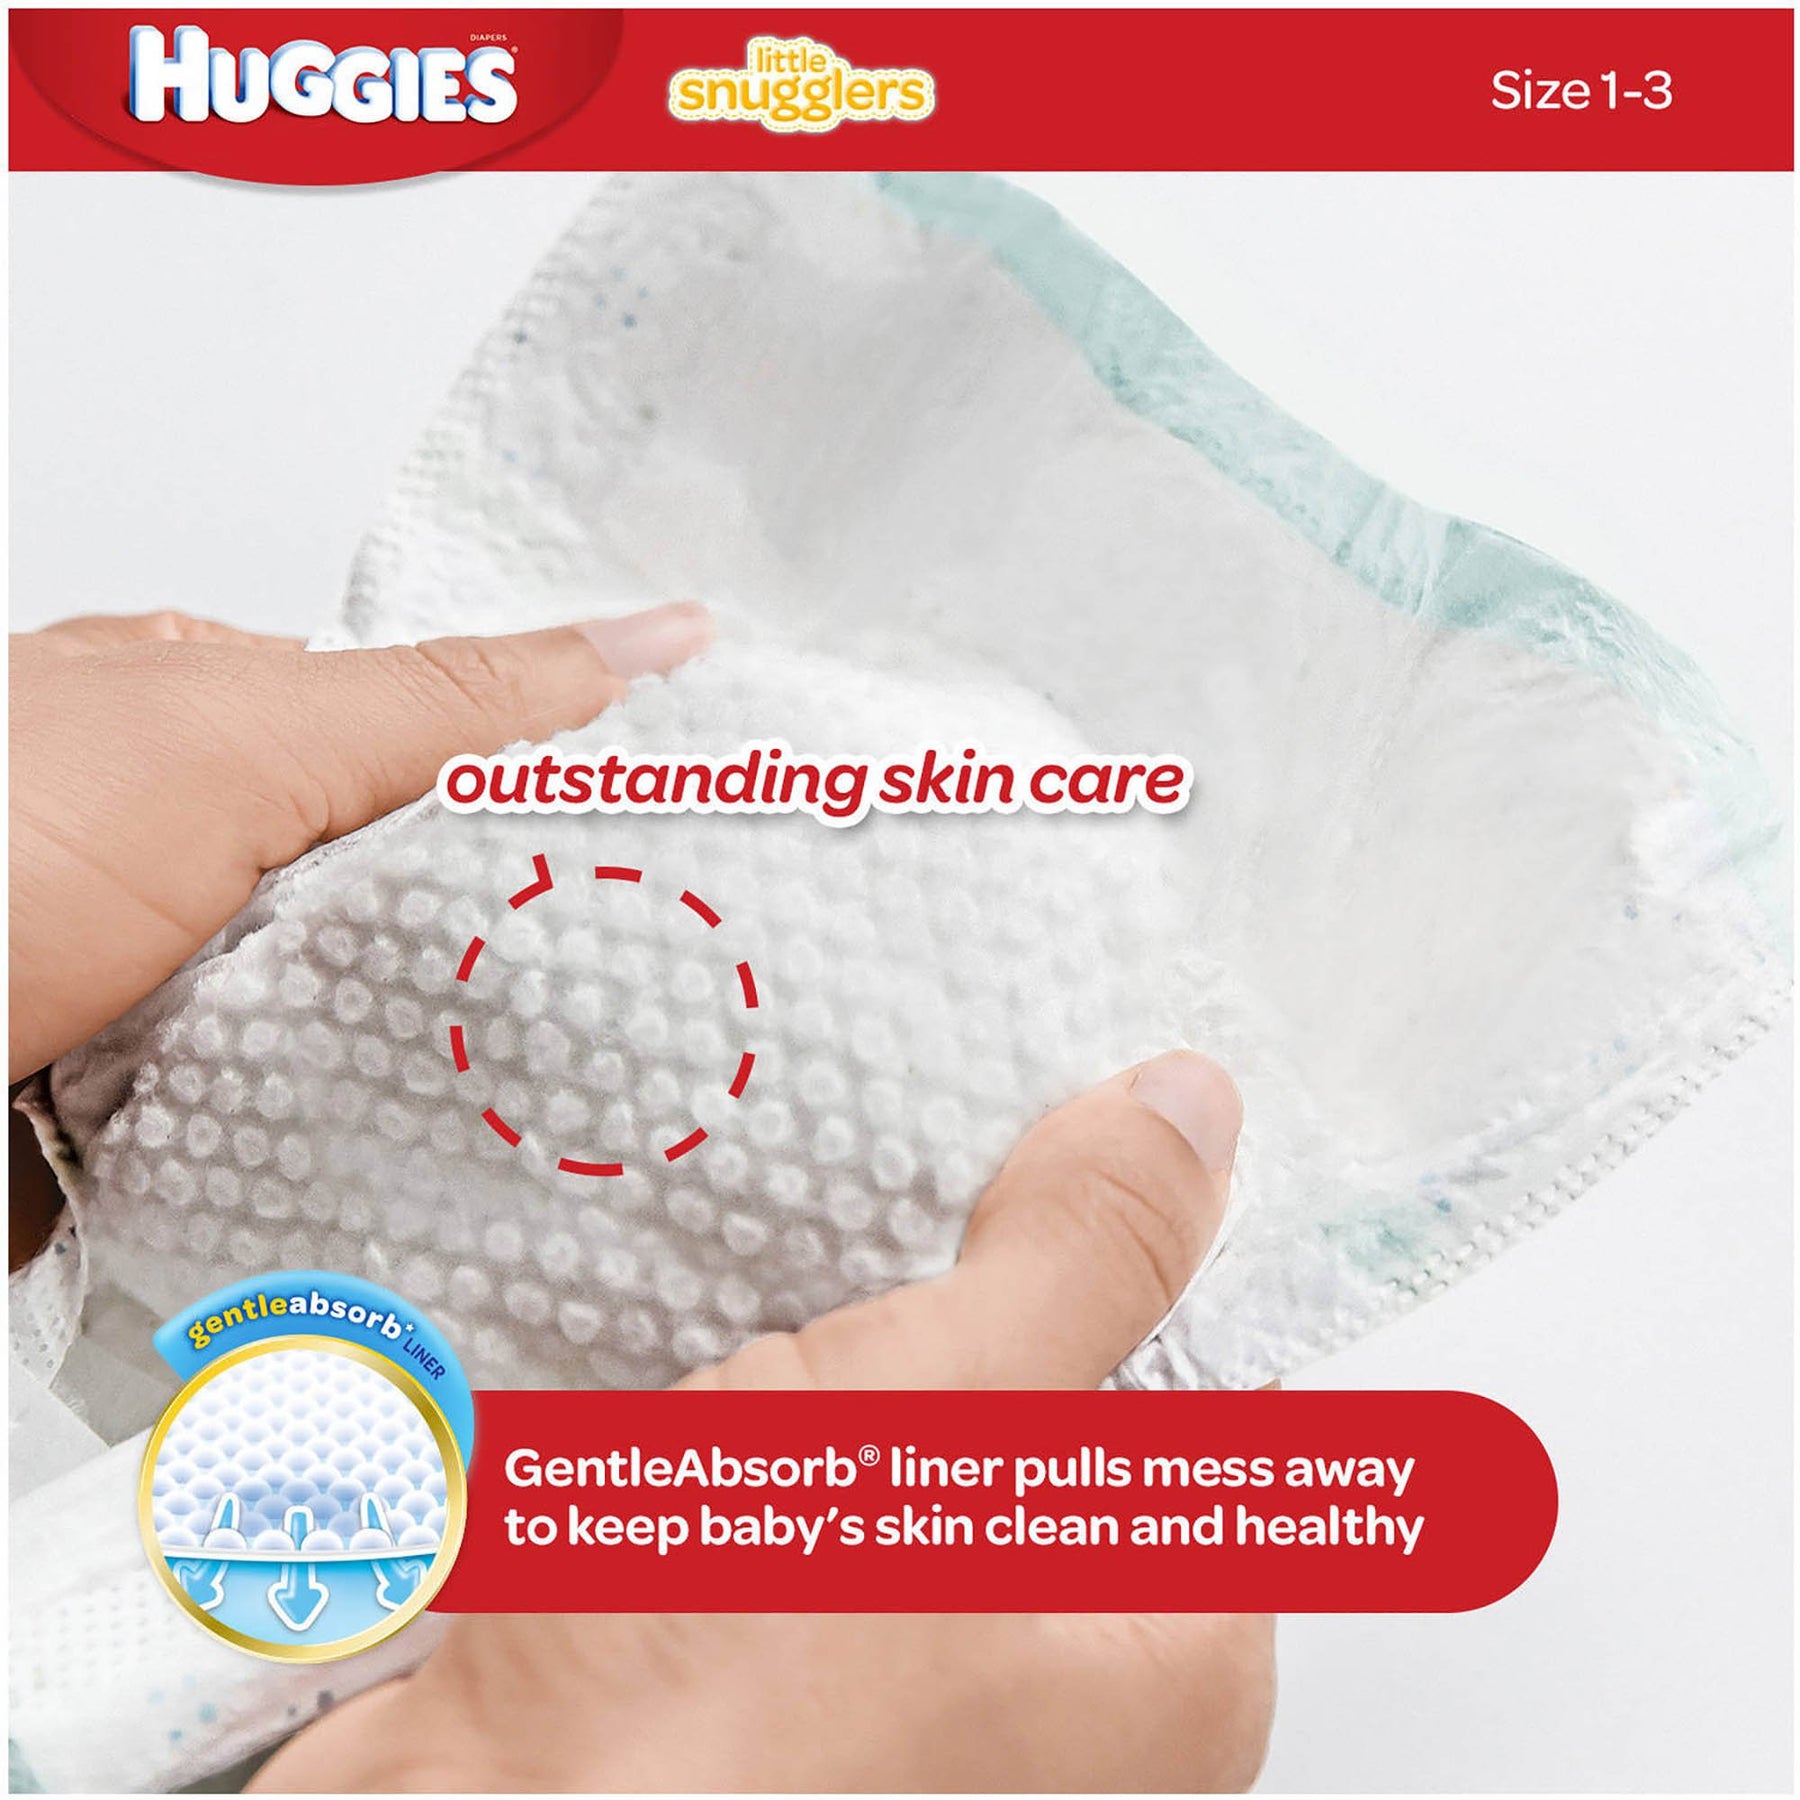 Huggies® Little Snugglers® Nano Preemie Diapers